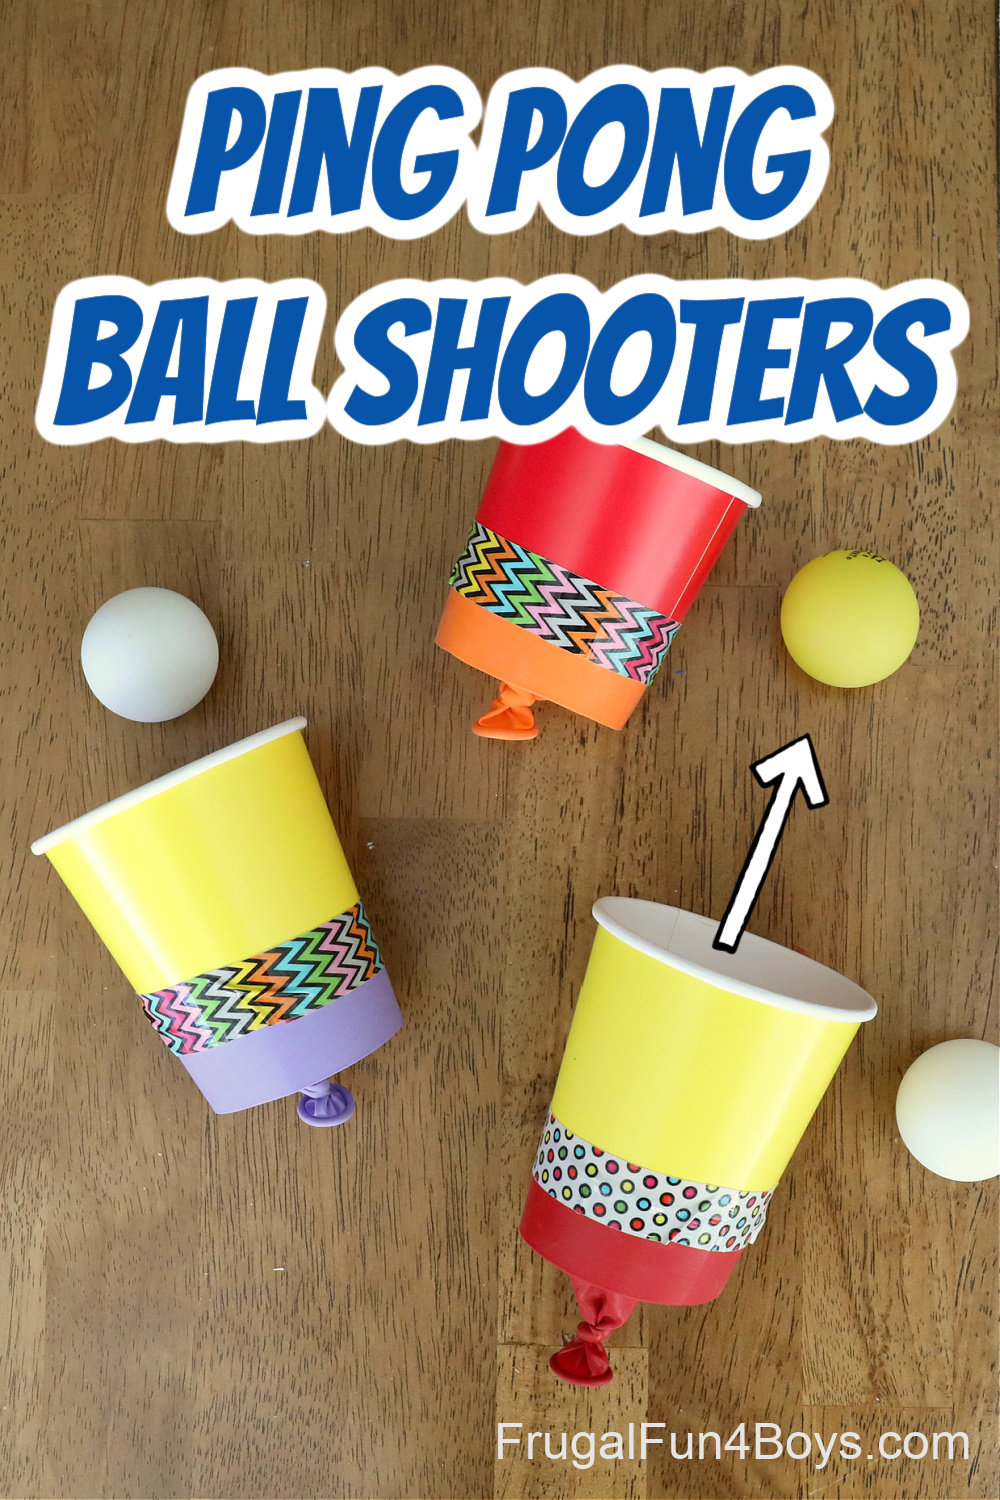 Ping pong ball shooters